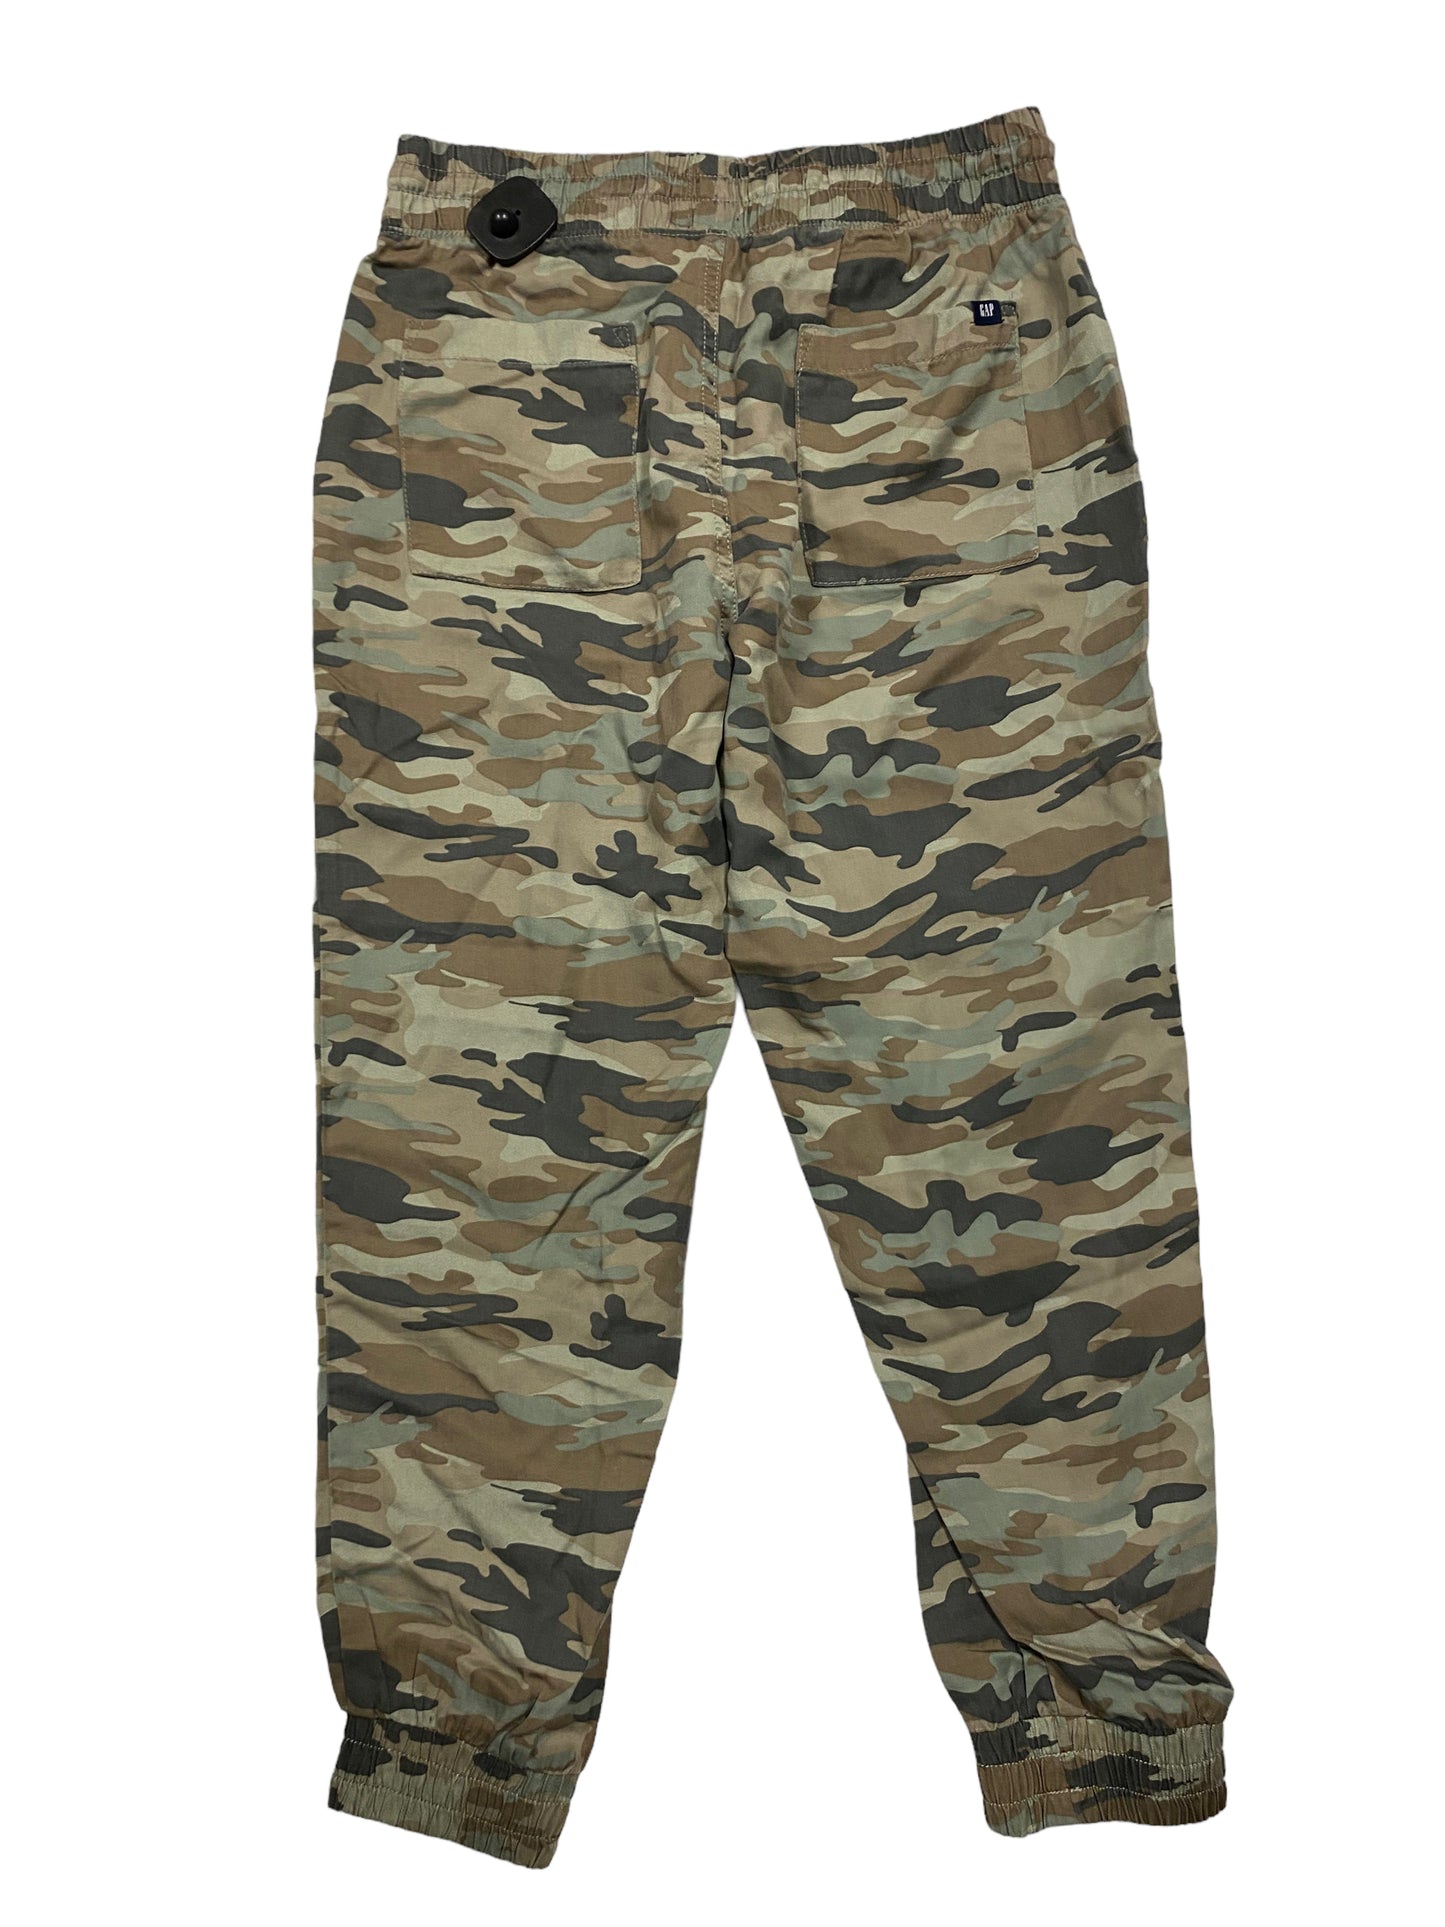 Camouflage Print Pants Joggers Gap, Size S